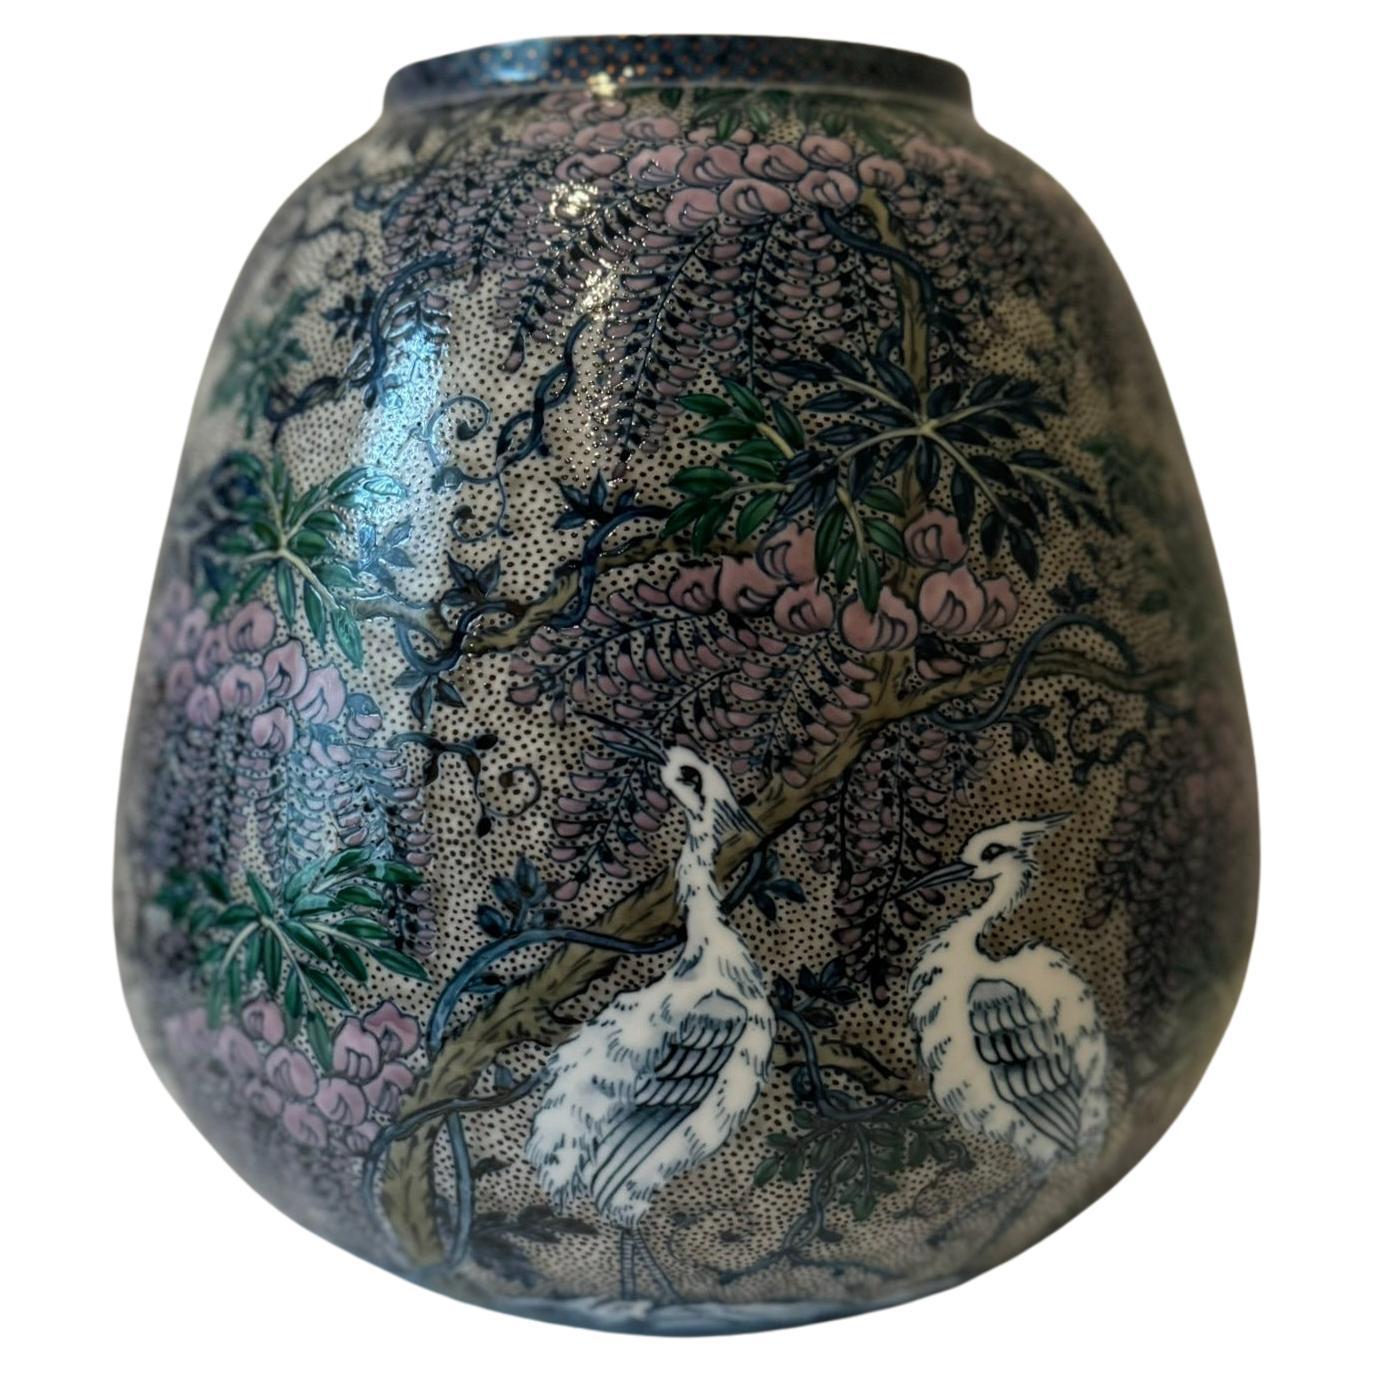 Japanese Contemporary Blue Pink Porcelain Vase by Master Artist, 2